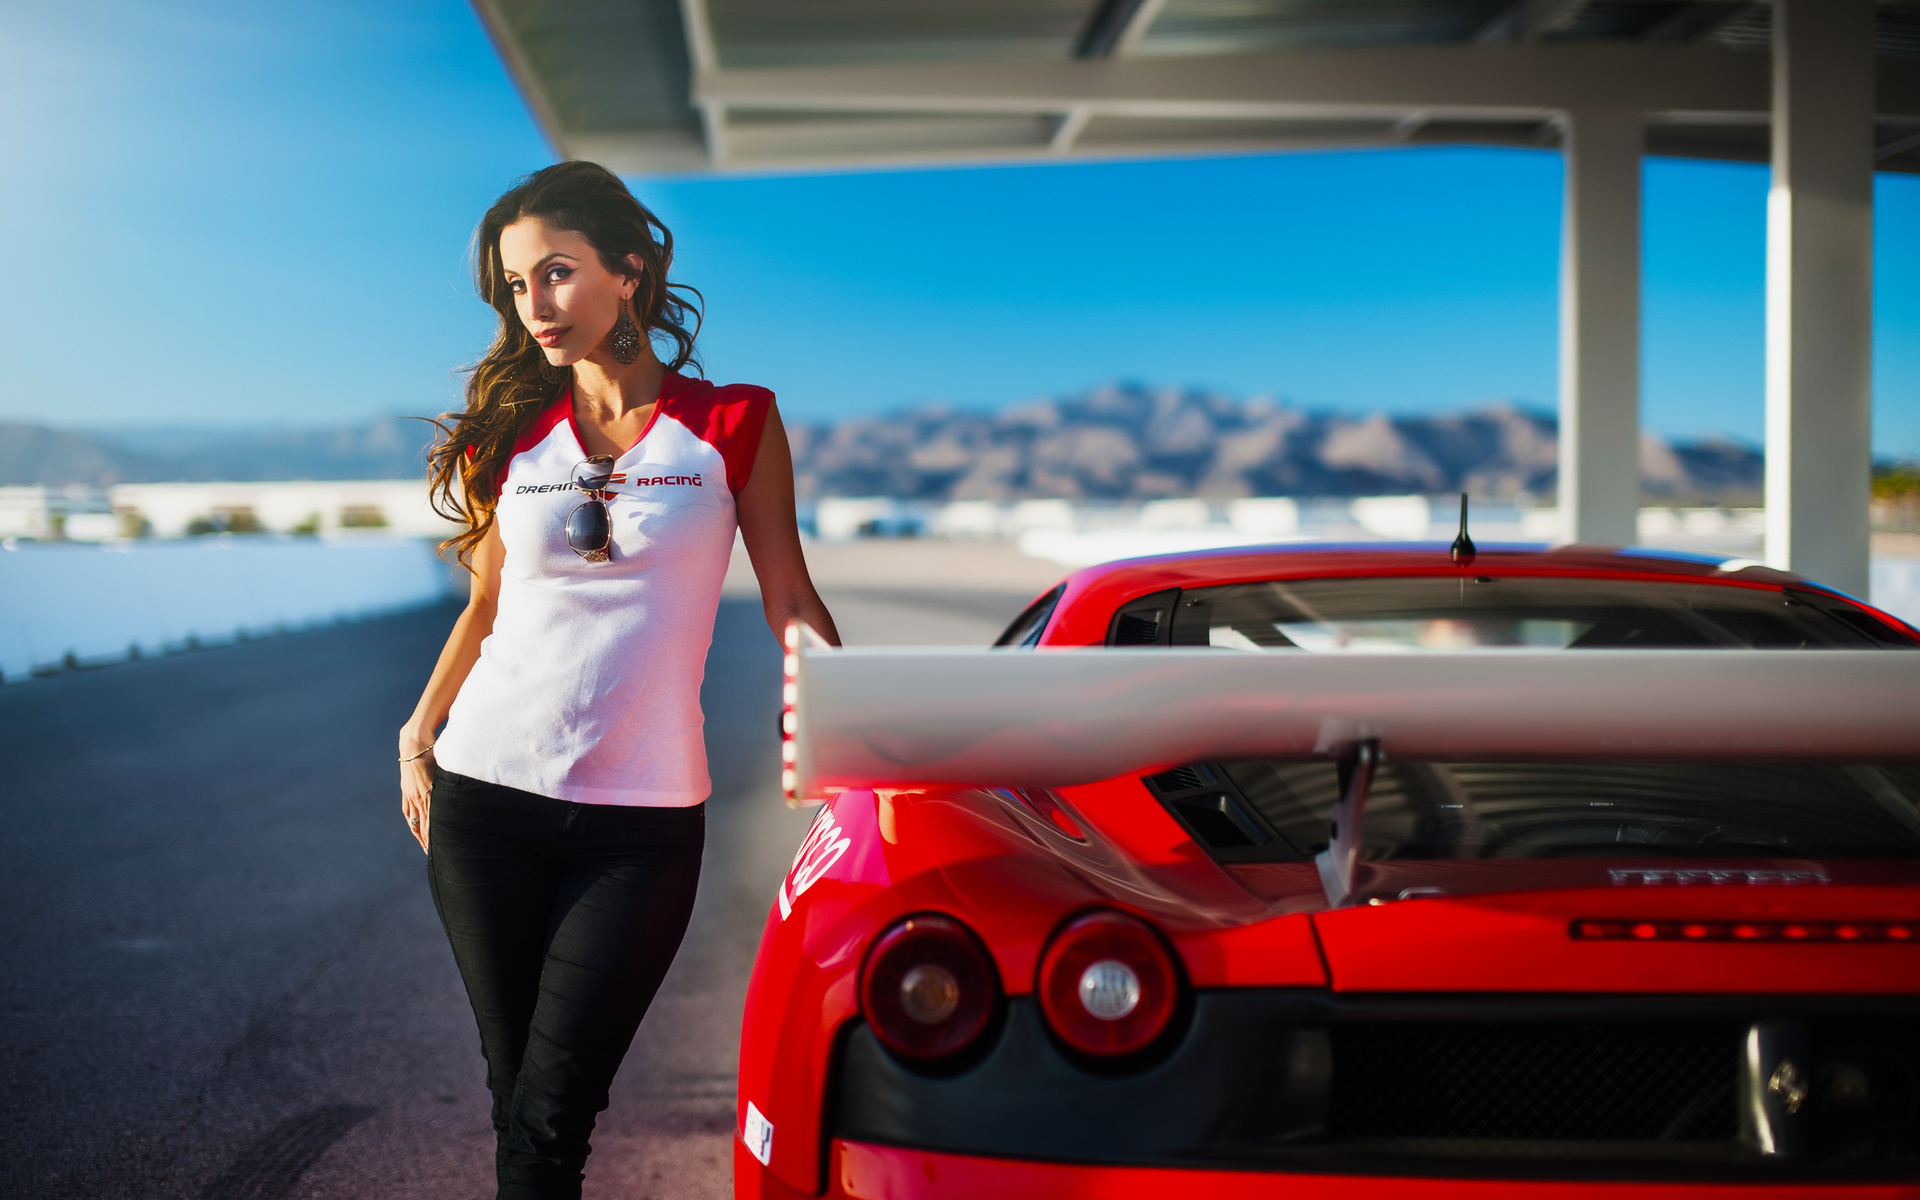 janice kakish, dream, racing, model, girl, beauty, supercar, ferrari, f430, red